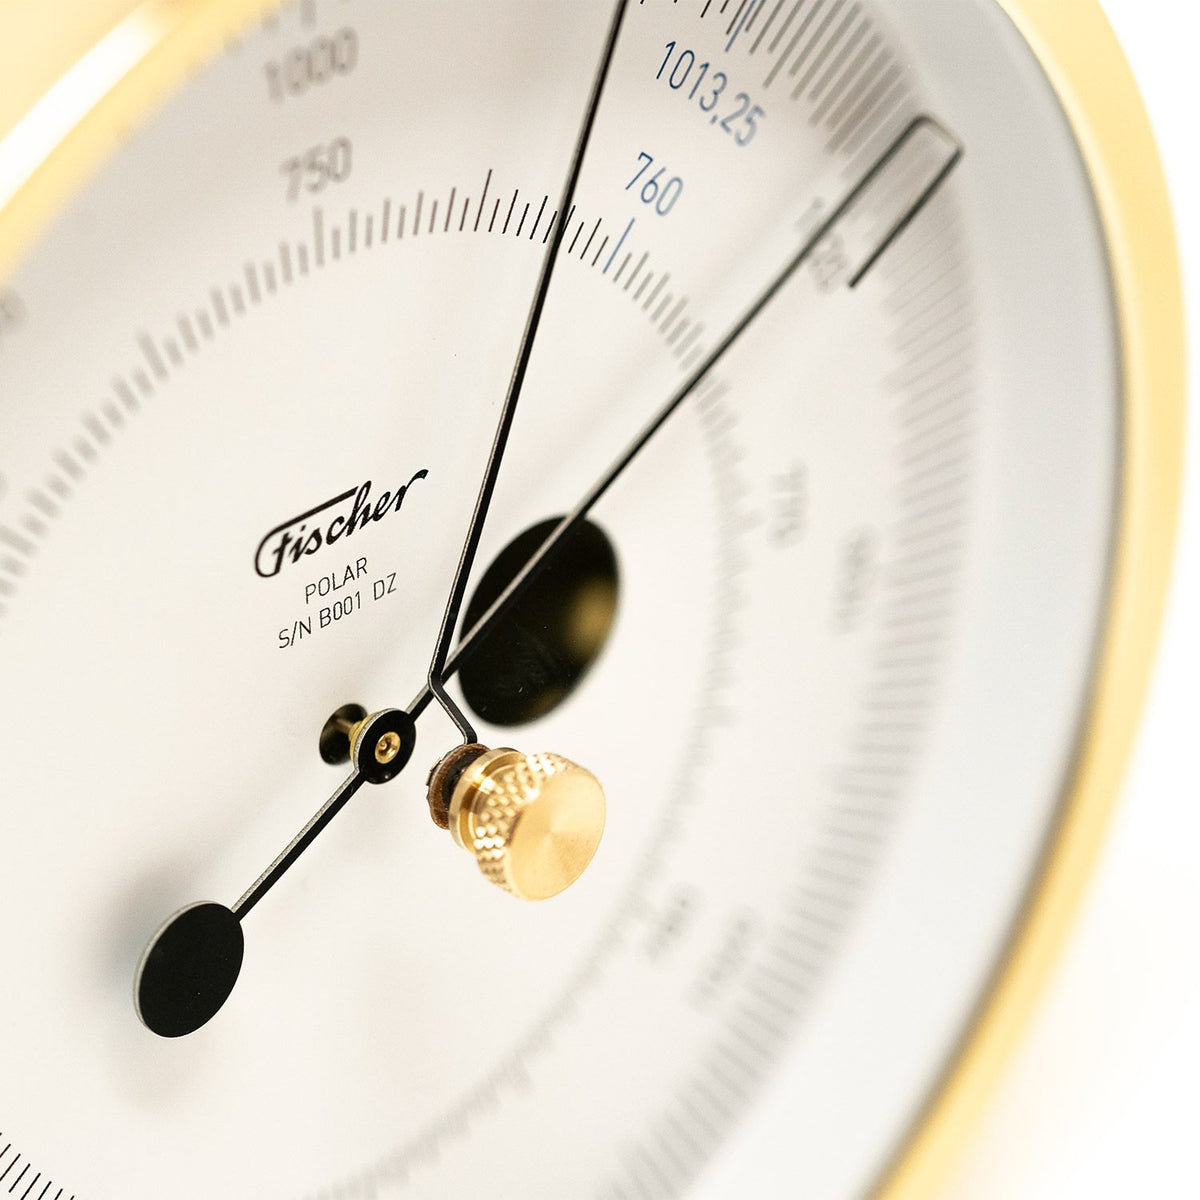 POLAR Instruments - Barometer Polished Brass